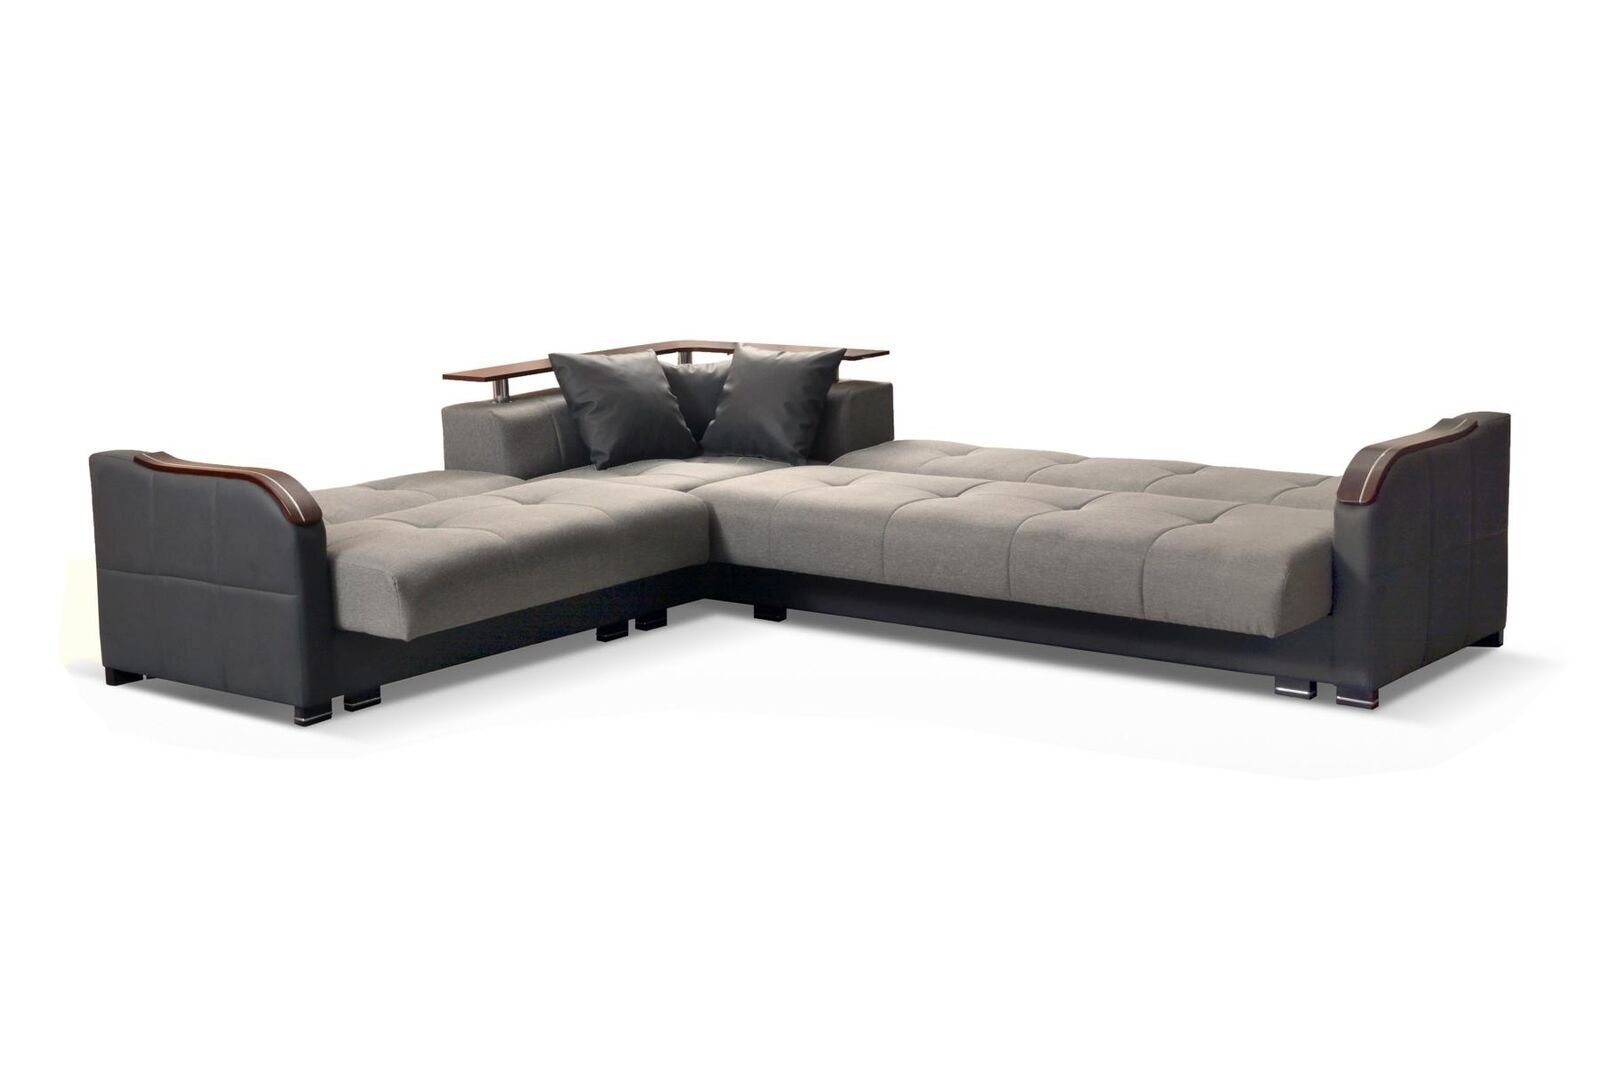 Textil L-Form Sofas Ecksofa, Sofas Design Neu JVmoebel Stoff Ecksofa Möbel Couch Luxus